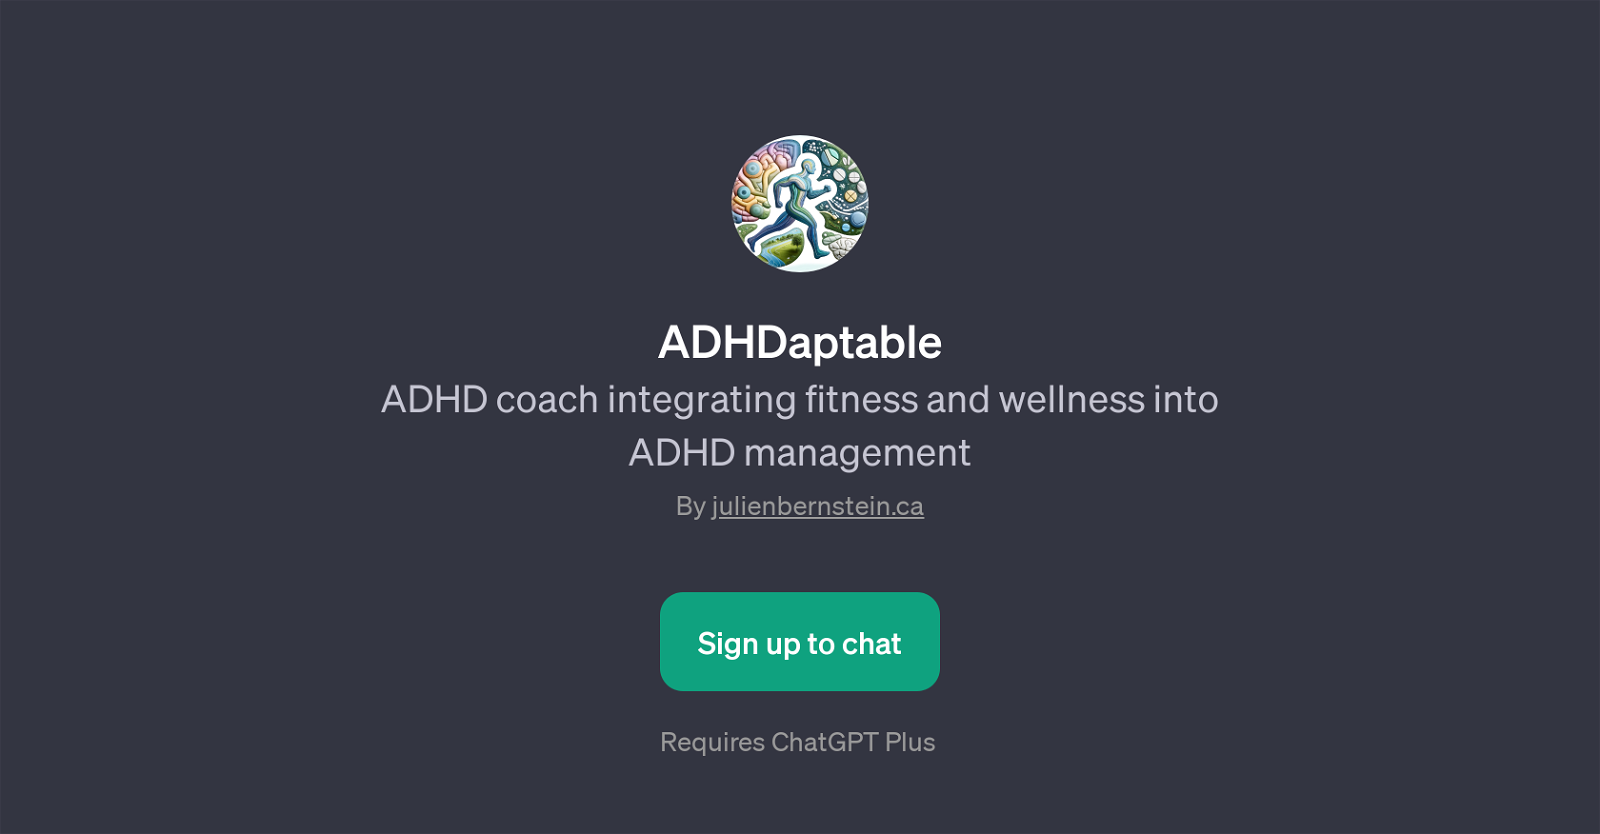 ADHDaptable website